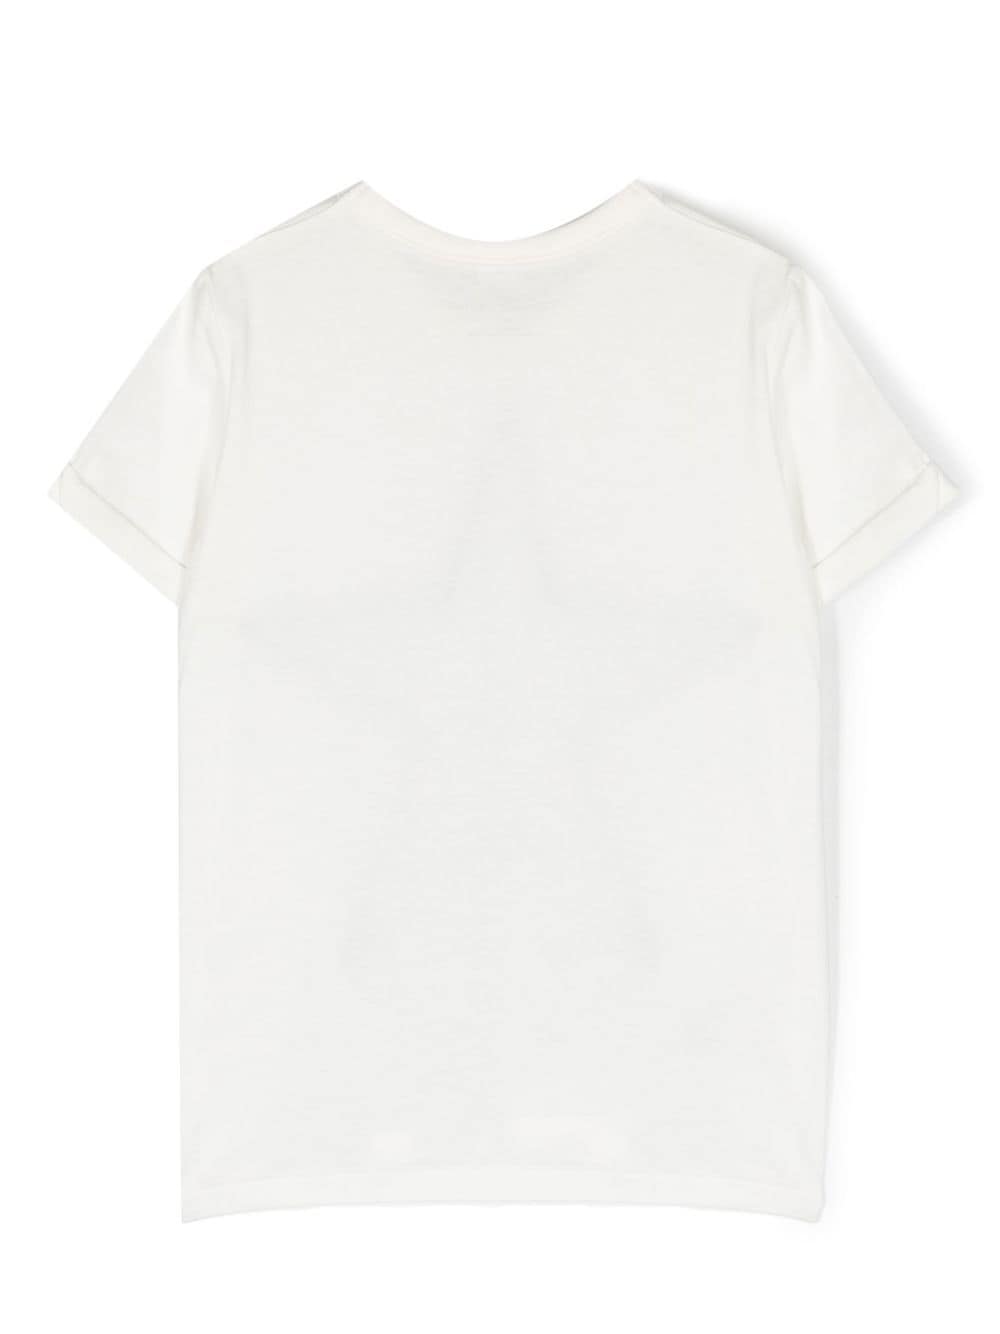 White cotton jersey girl STELLA McCARTNEY t-shirt